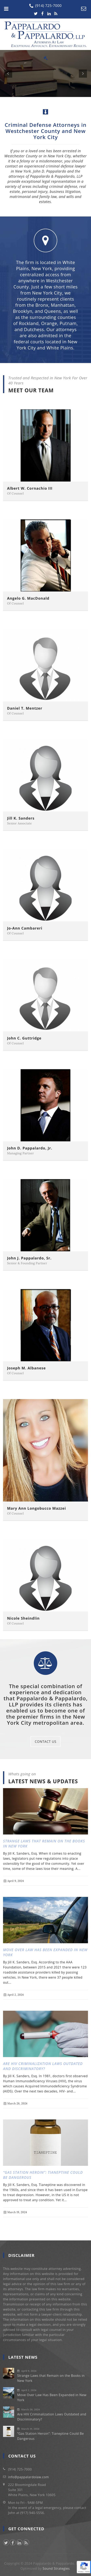 Pappalardo & Pappalardo, LLP - Scarsdale NY Lawyers